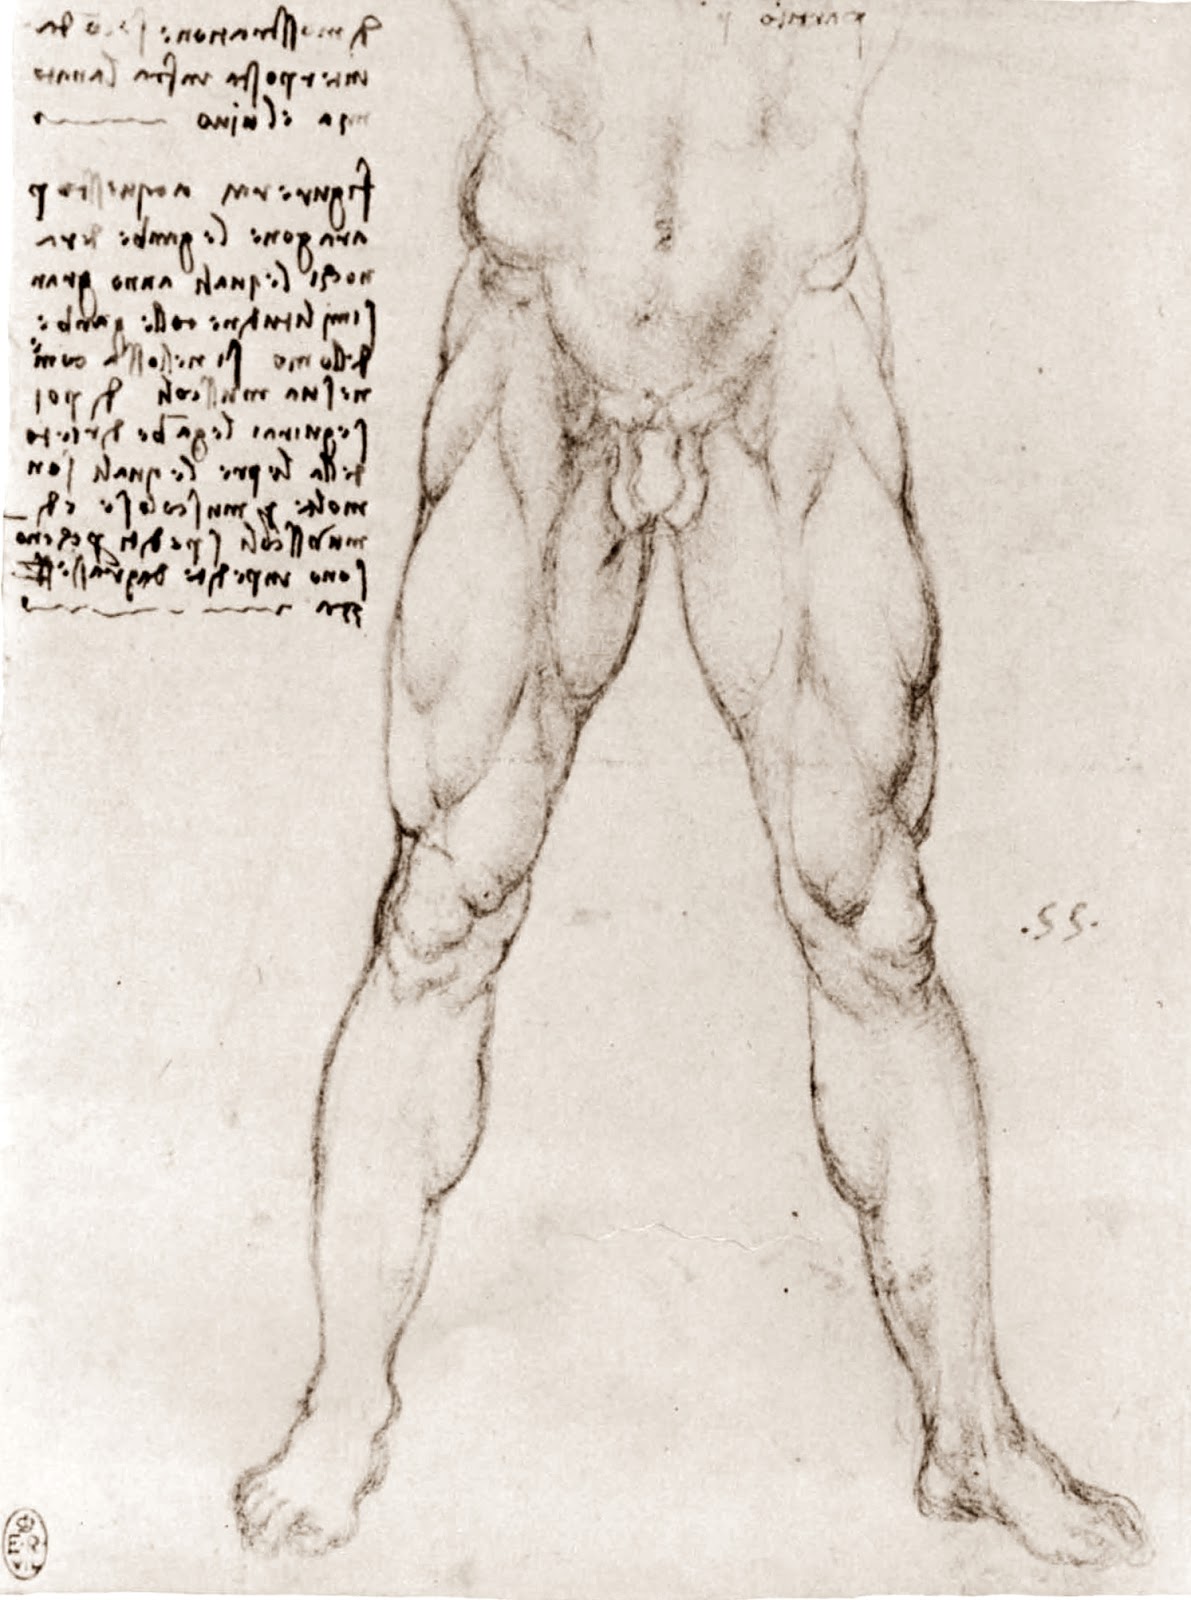 Leonardo+da+Vinci-1452-1519 (825).jpg